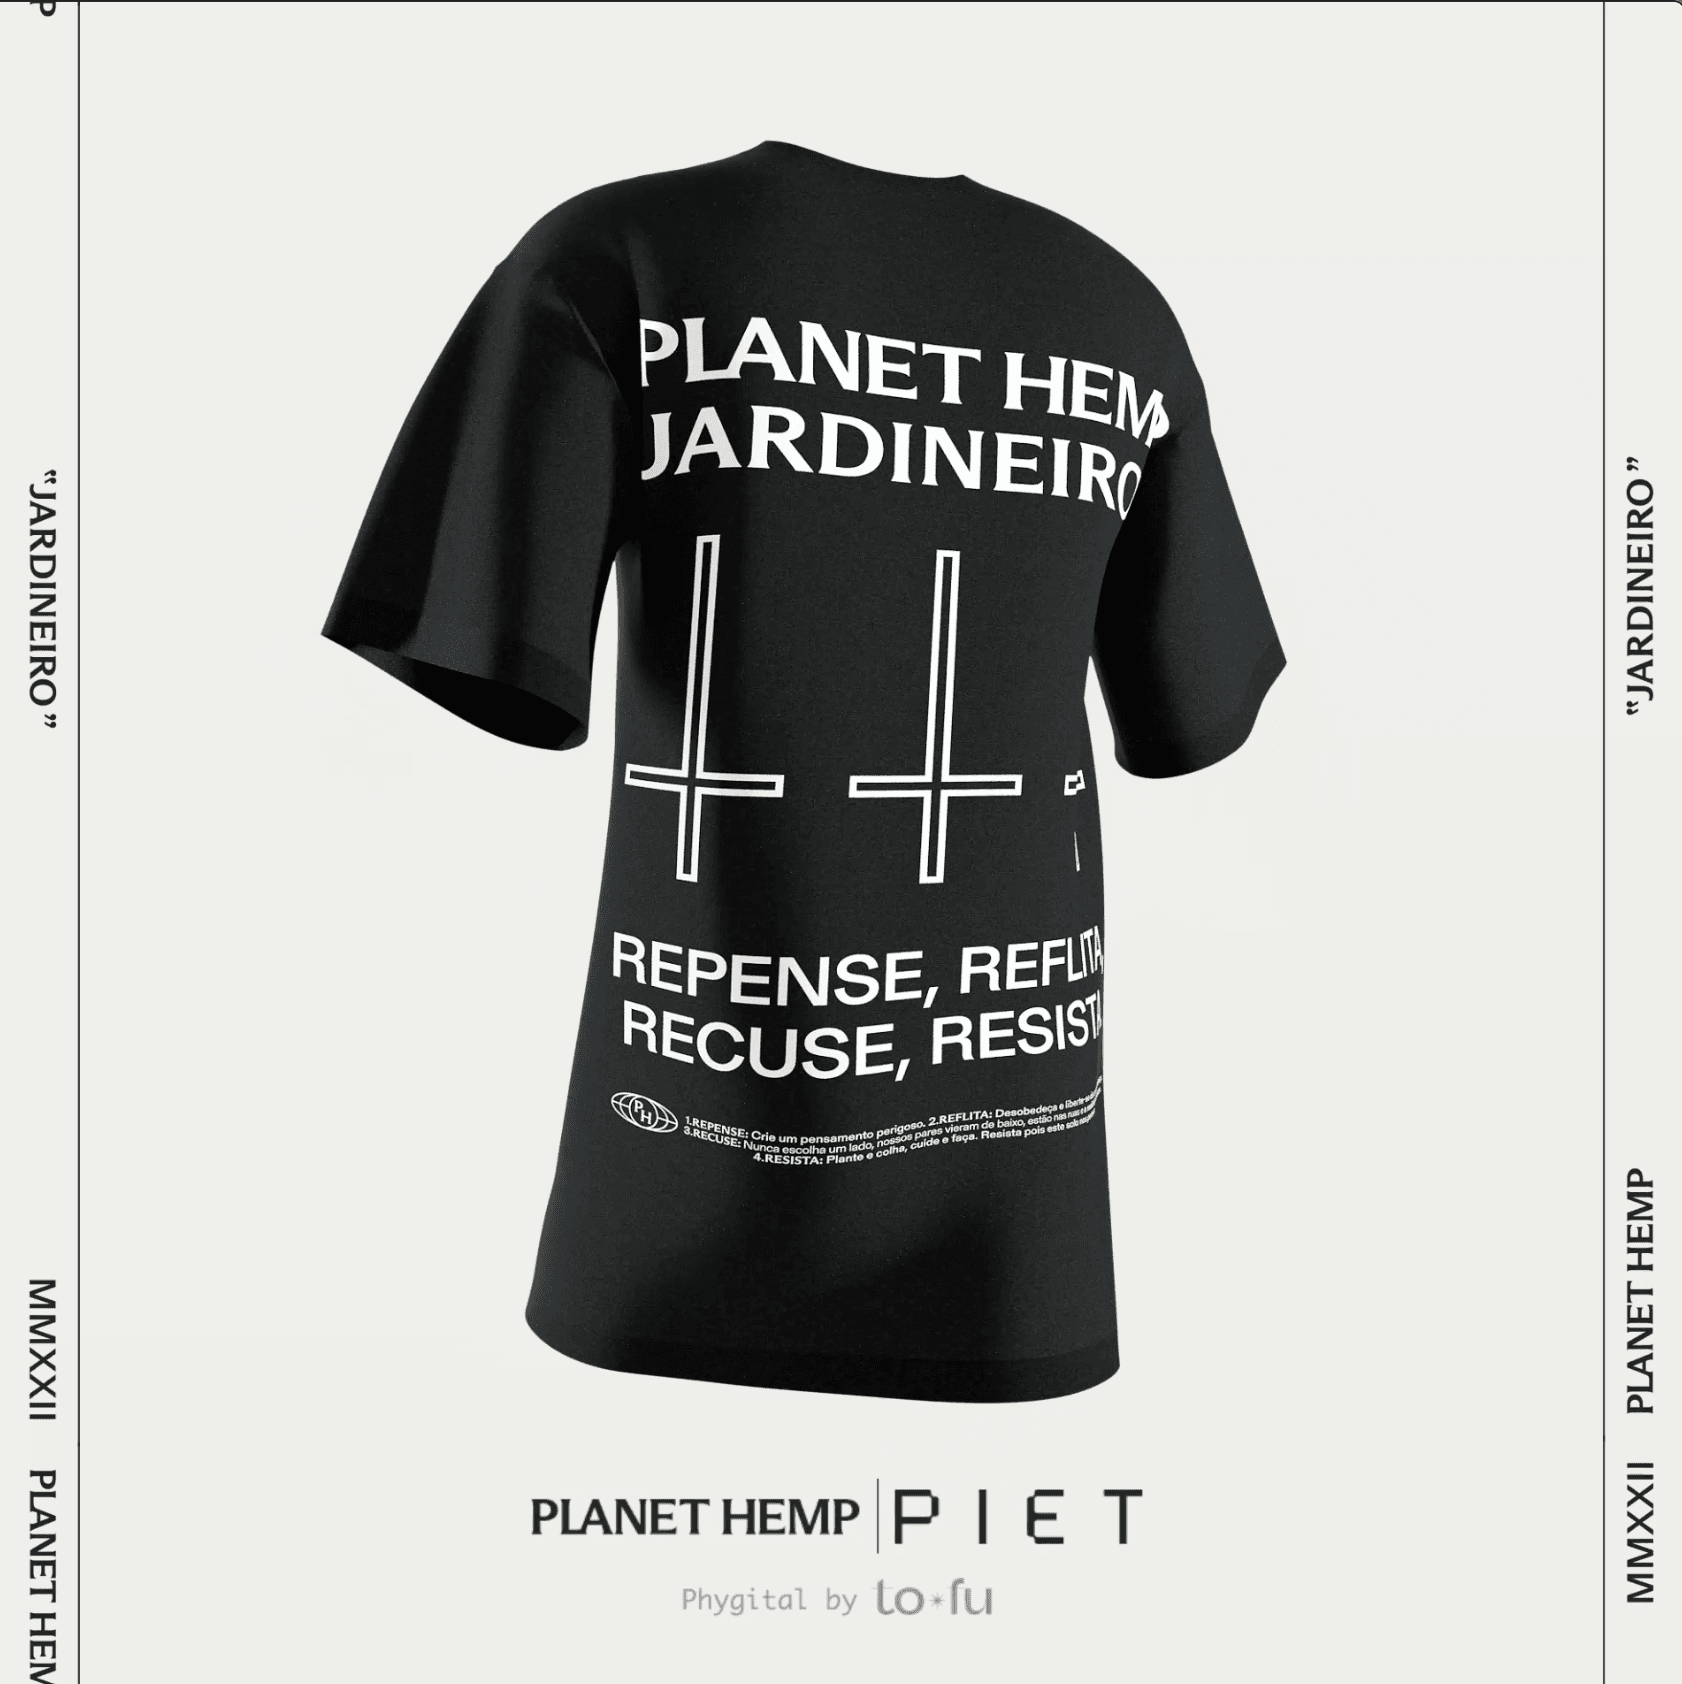 Jardineiros - Planet Hemp | PIET Phygital by T0fu.tech